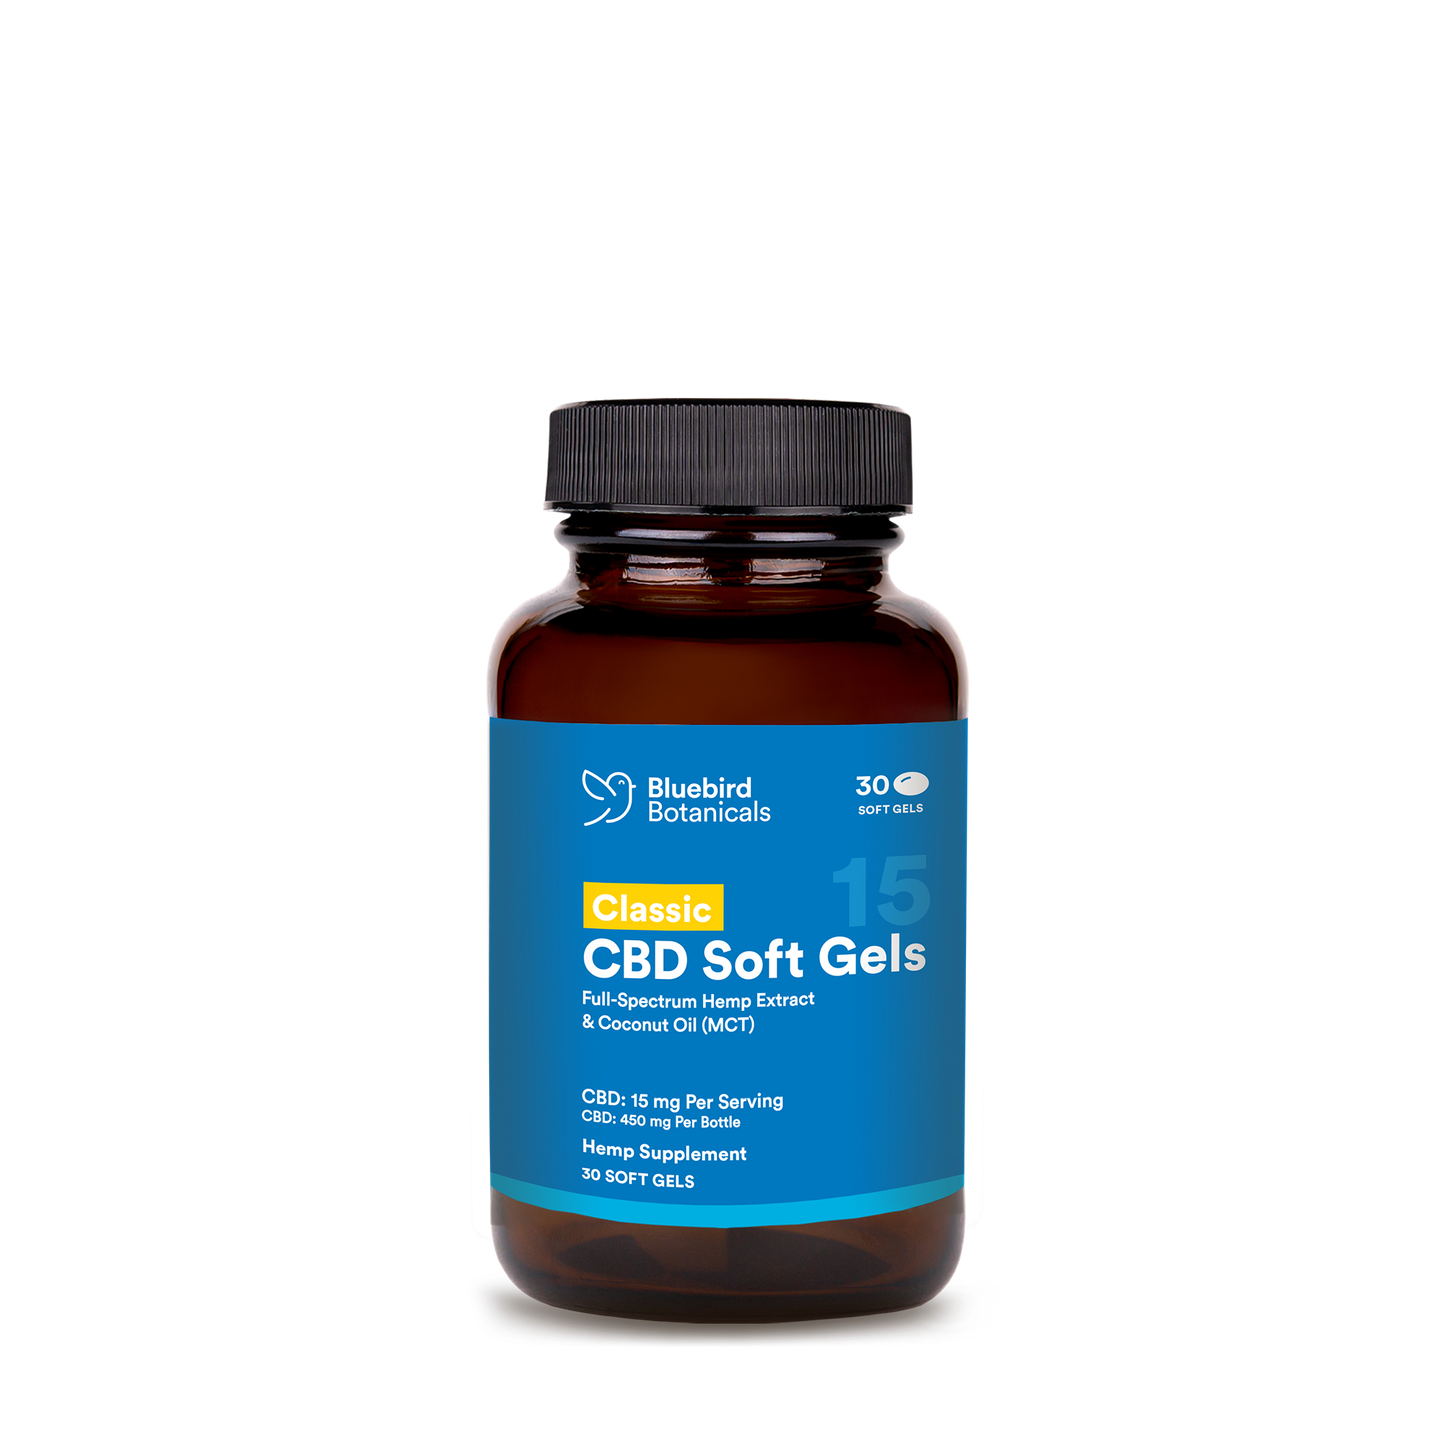 Classic CBD Oil Soft Gels Concentrated CBD Capsules Bluebird Botanicals 30 count - $29.95  